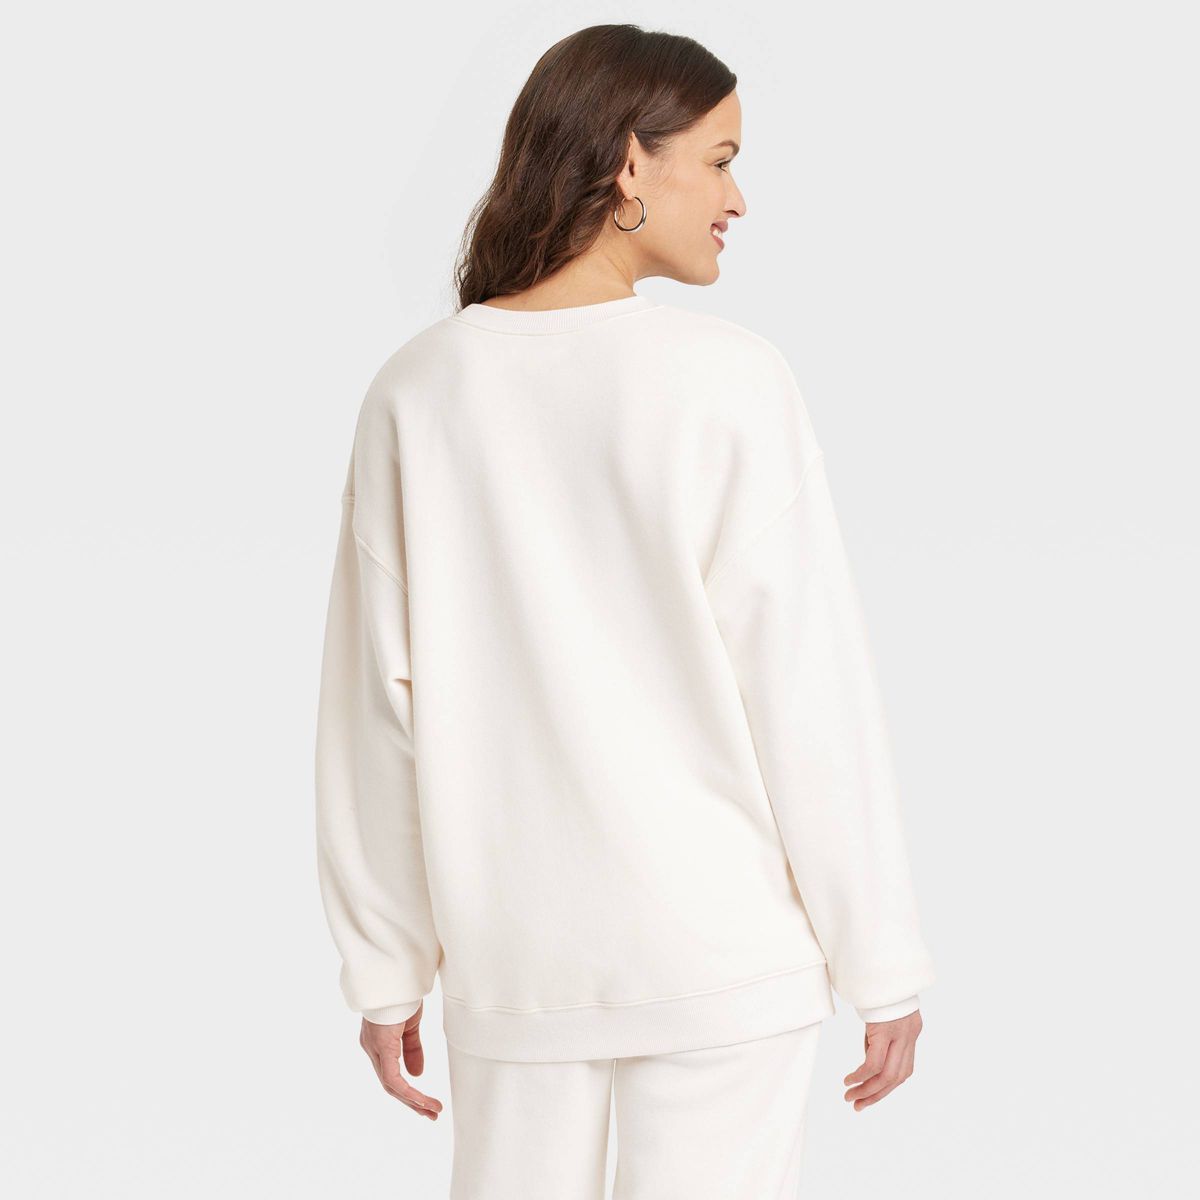 Women's Mother Graphic Sweatshirt - White XS | Target